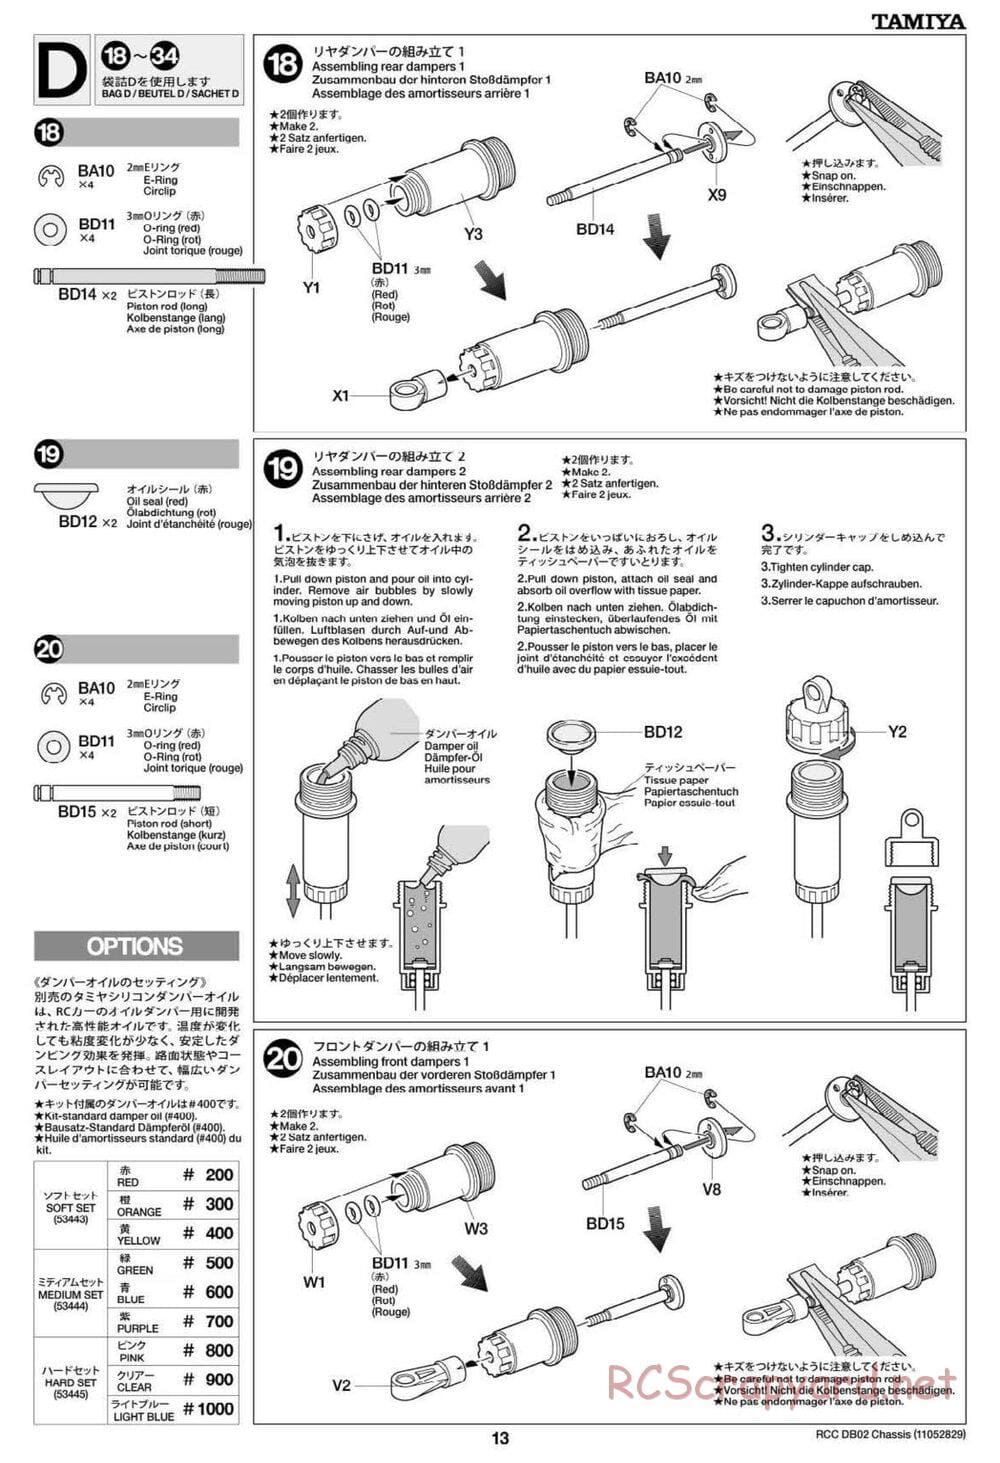 Tamiya - Leonis - DB-02 Chassis - Manual - Page 13